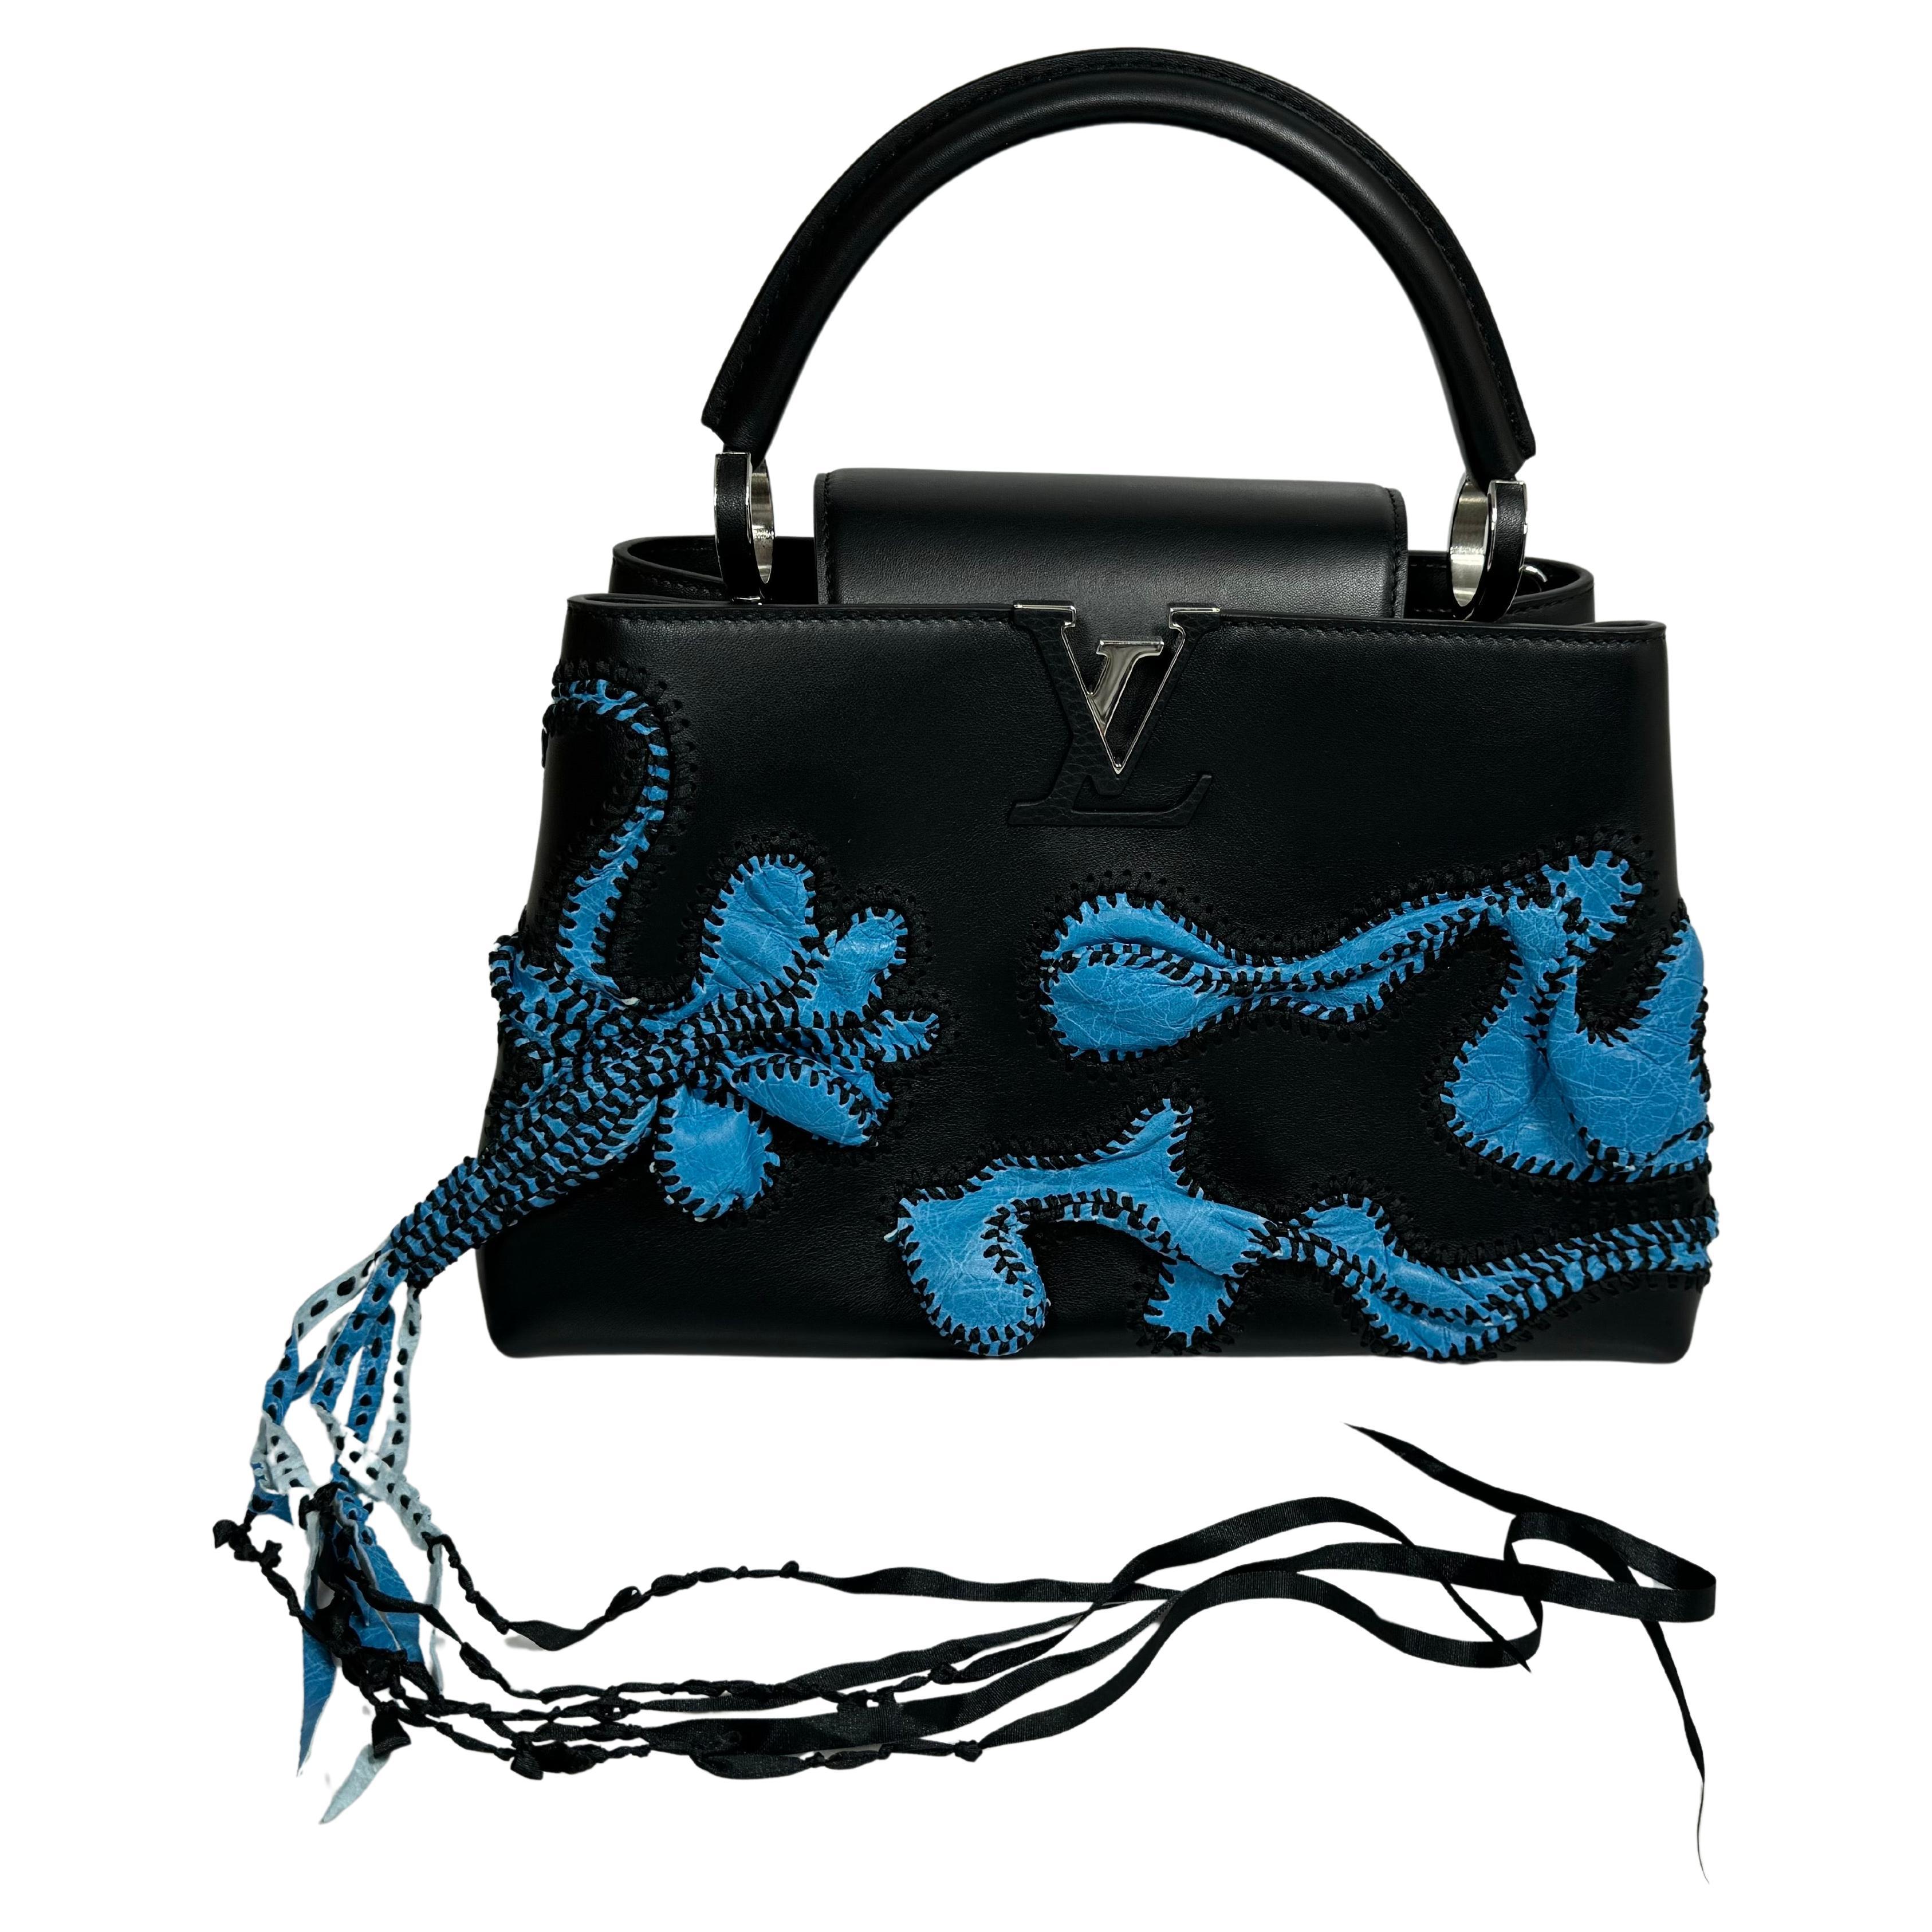 Louis Vuitton Limited Edition Nicholas Hlobo's Artycapucines Handbag-NEW IN BOX For Sale